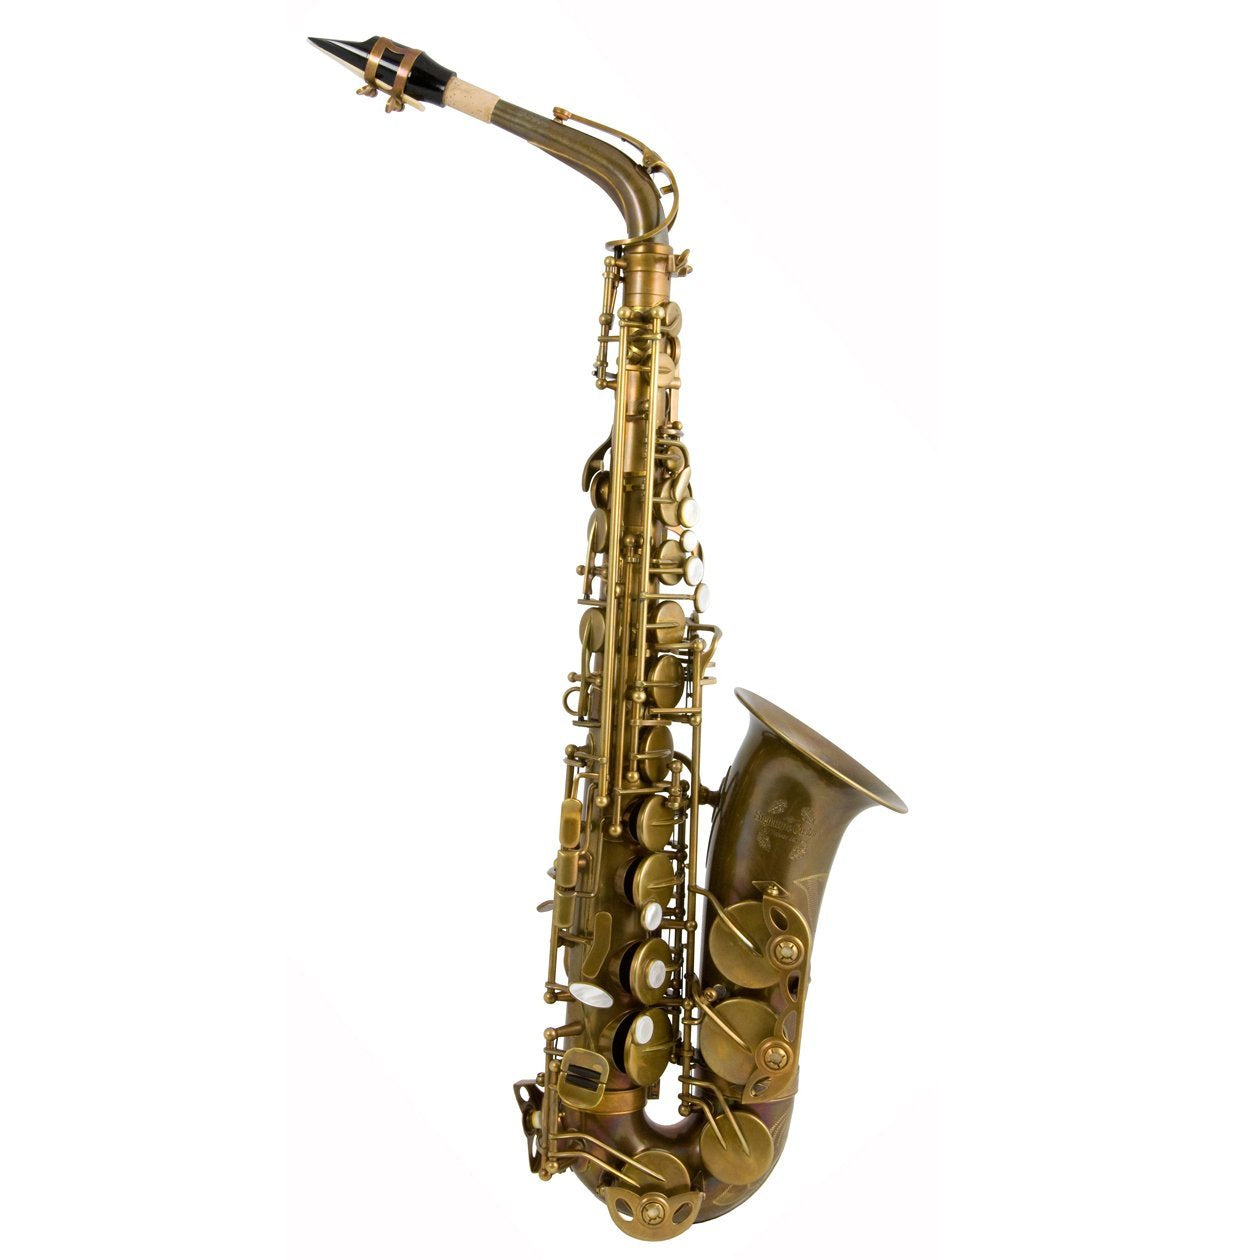 Trevor James - The Horn Alto Saxophone - Music Elements